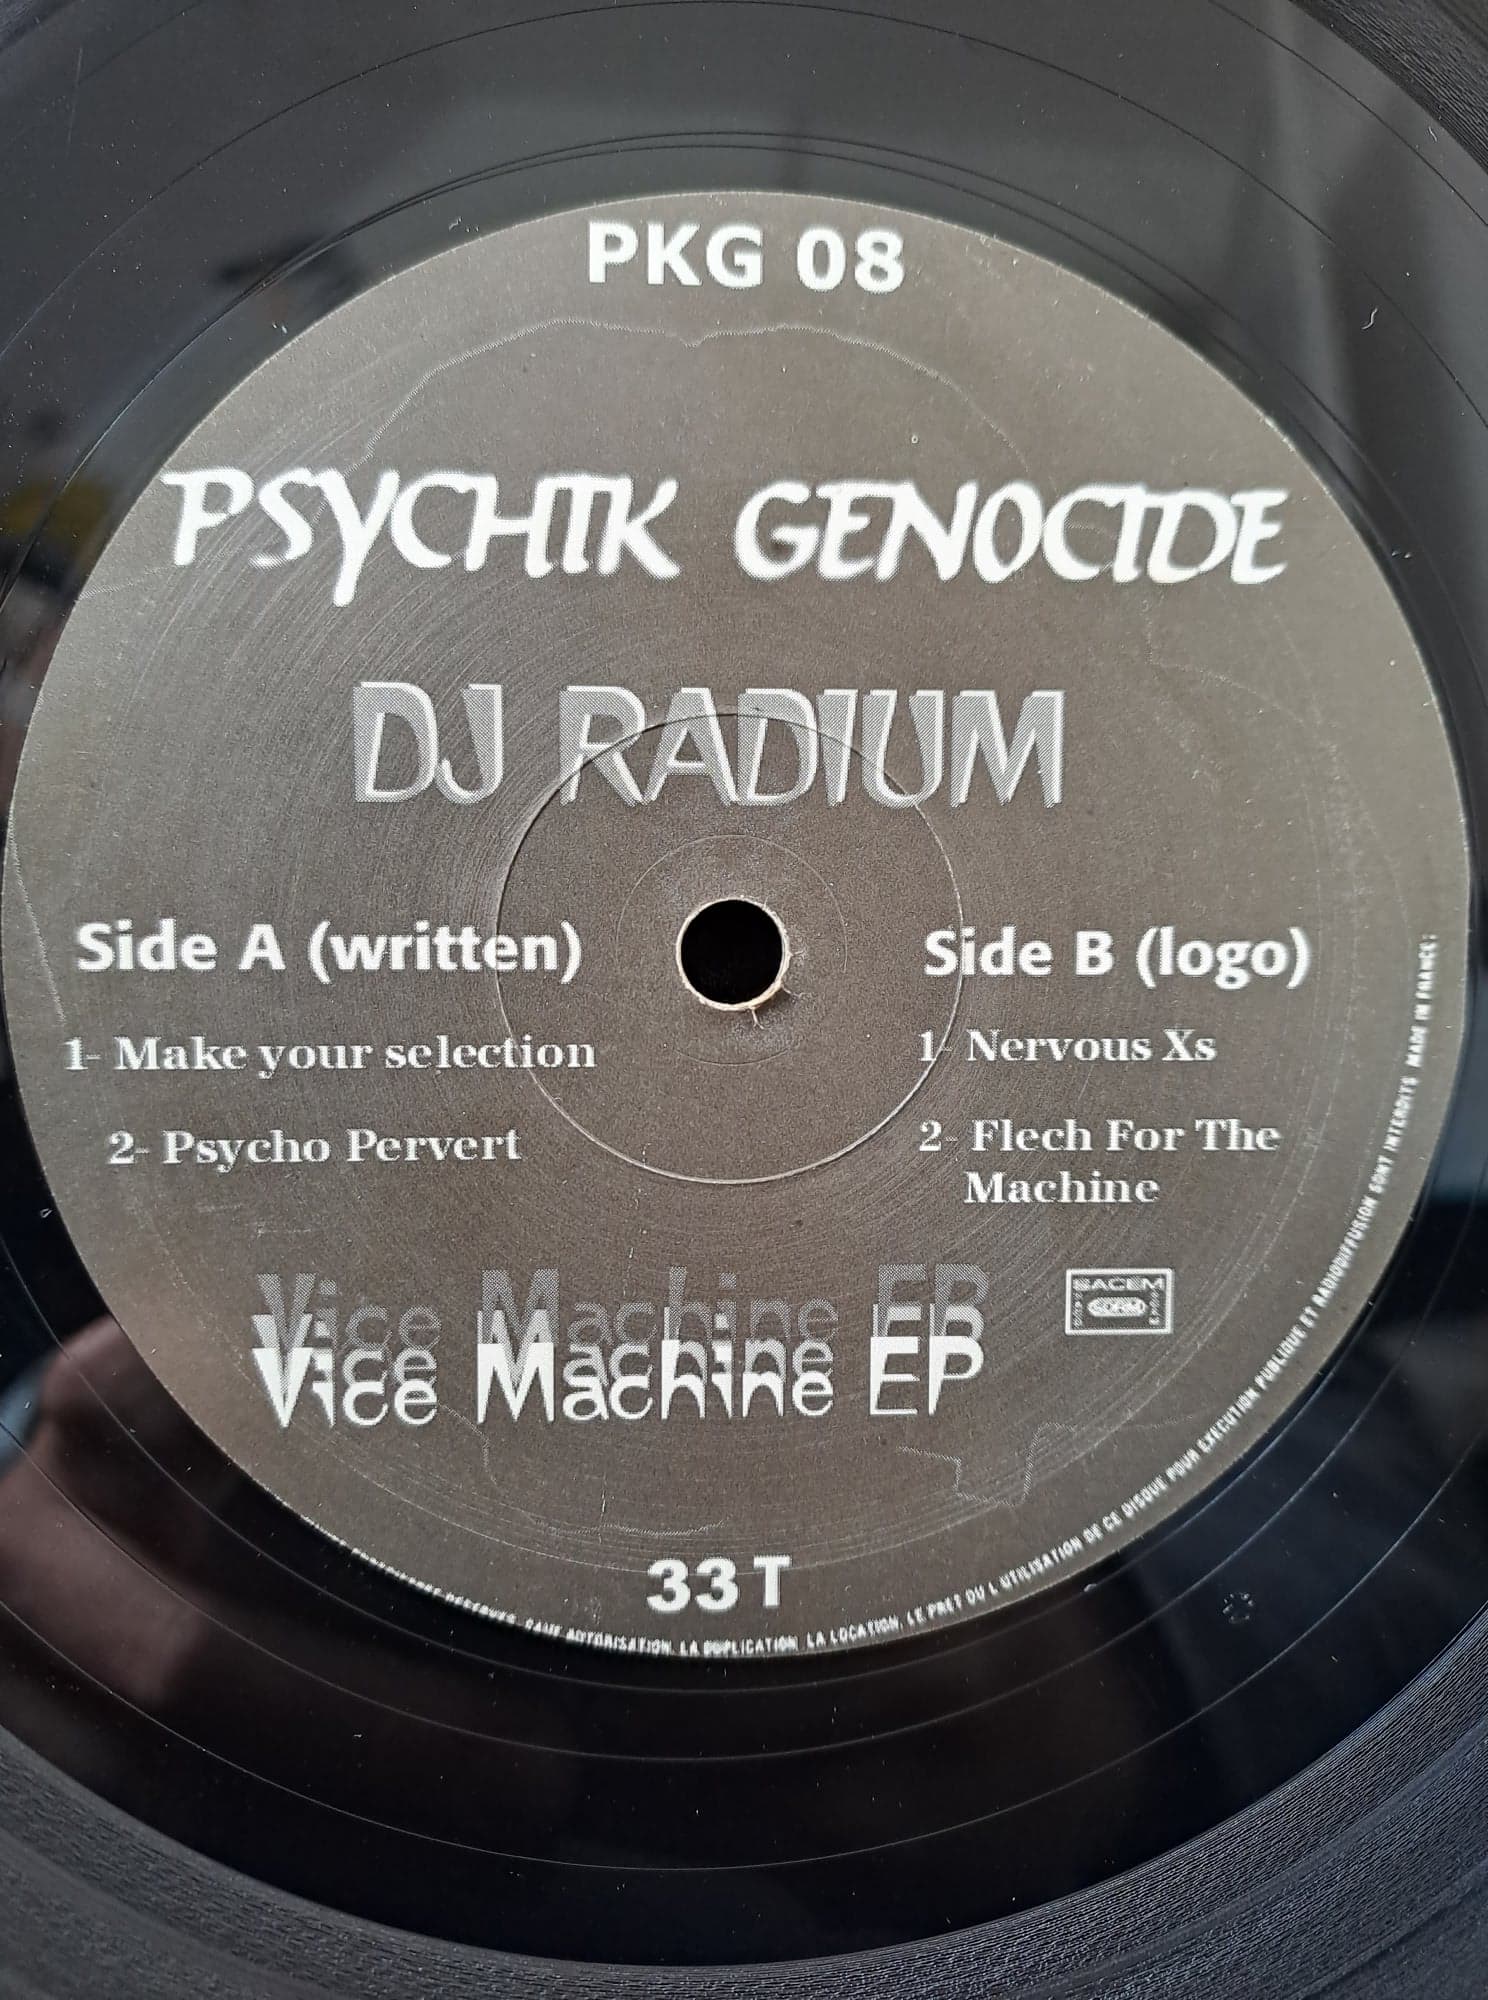 Psychik Genocide 08 - vinyle hardcore